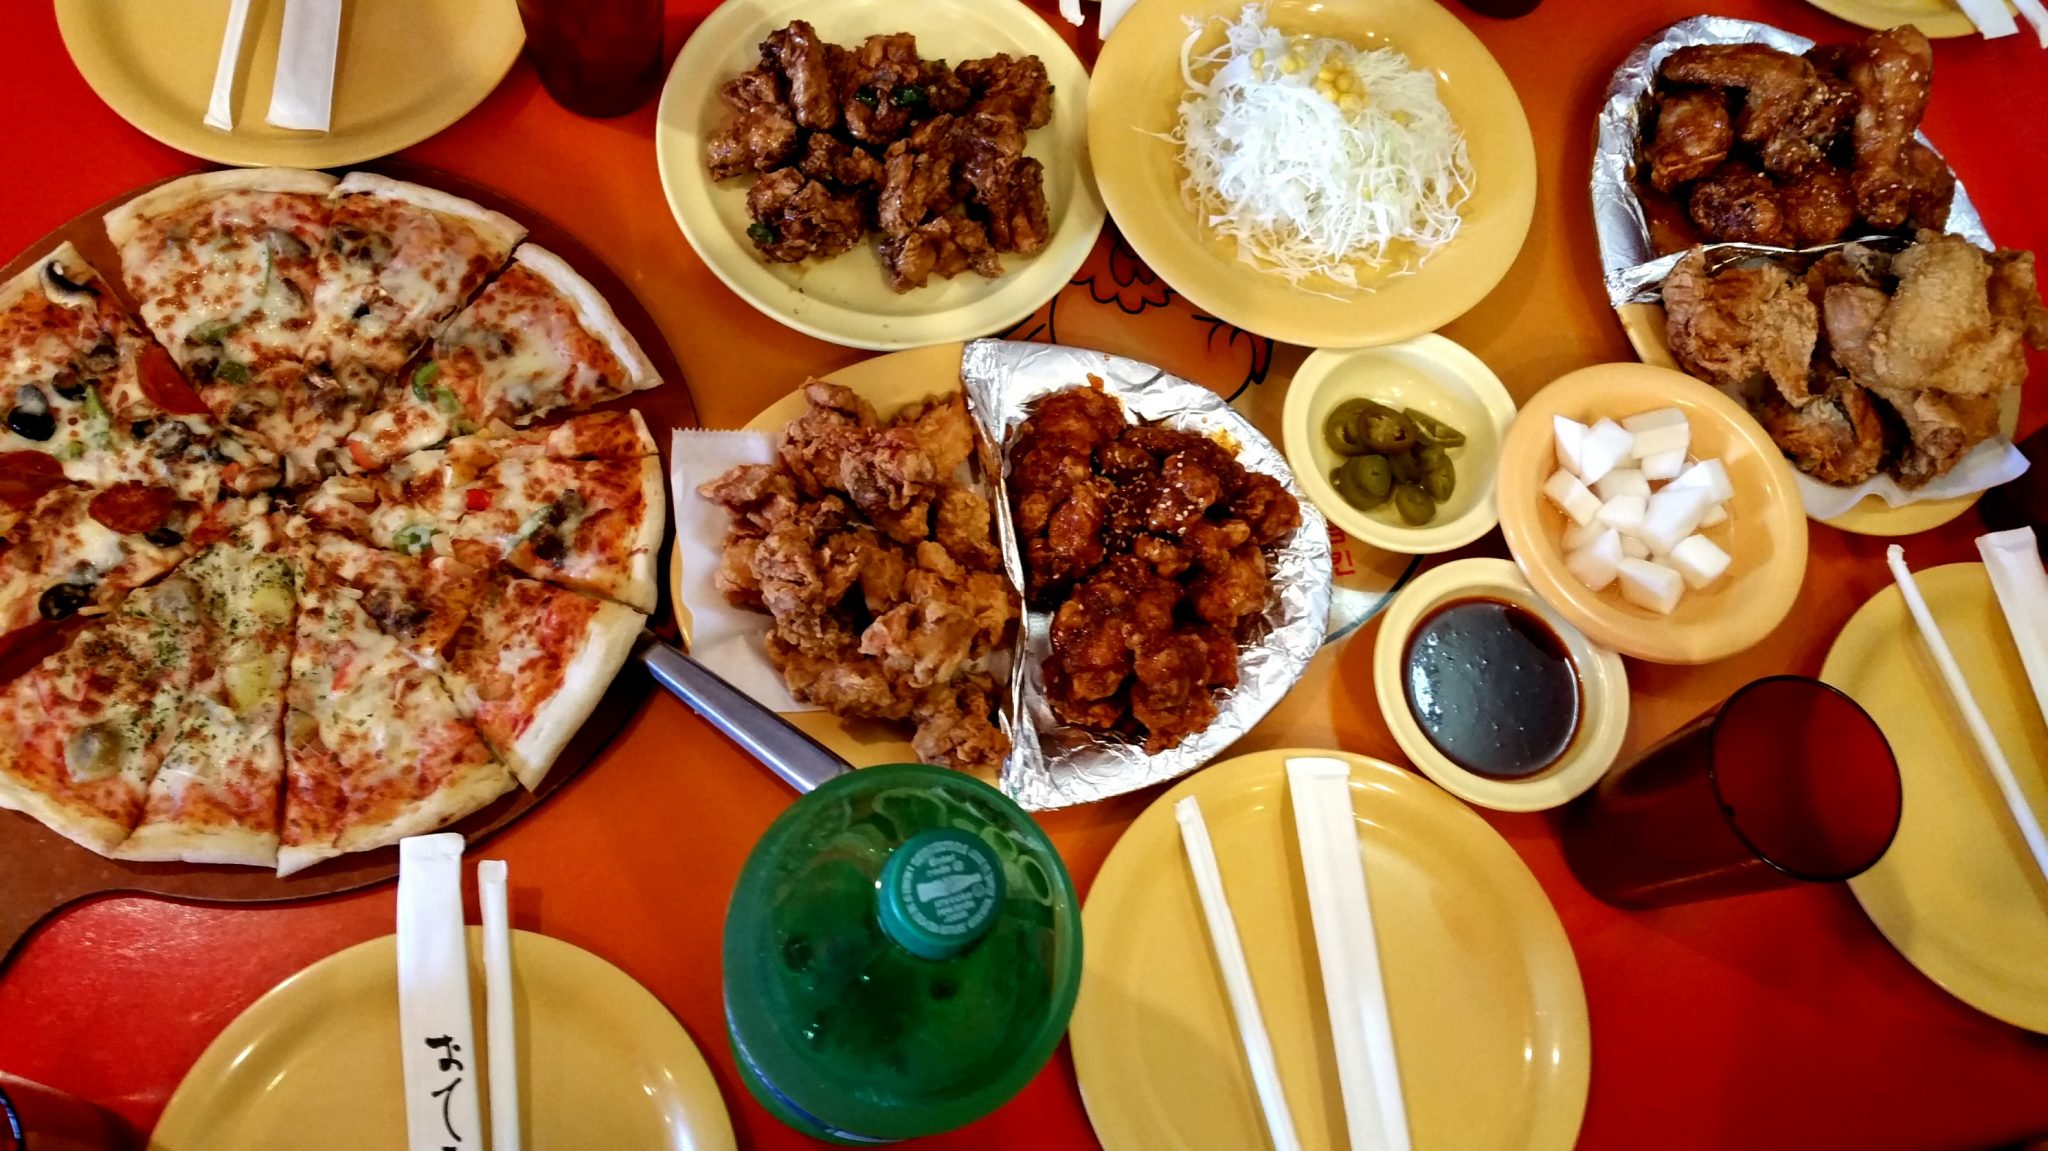 My Favorite Suwanee Chicken and Pizza Explore Gwinnett #SeoulOfTheSouth Korean Restaurant Tour